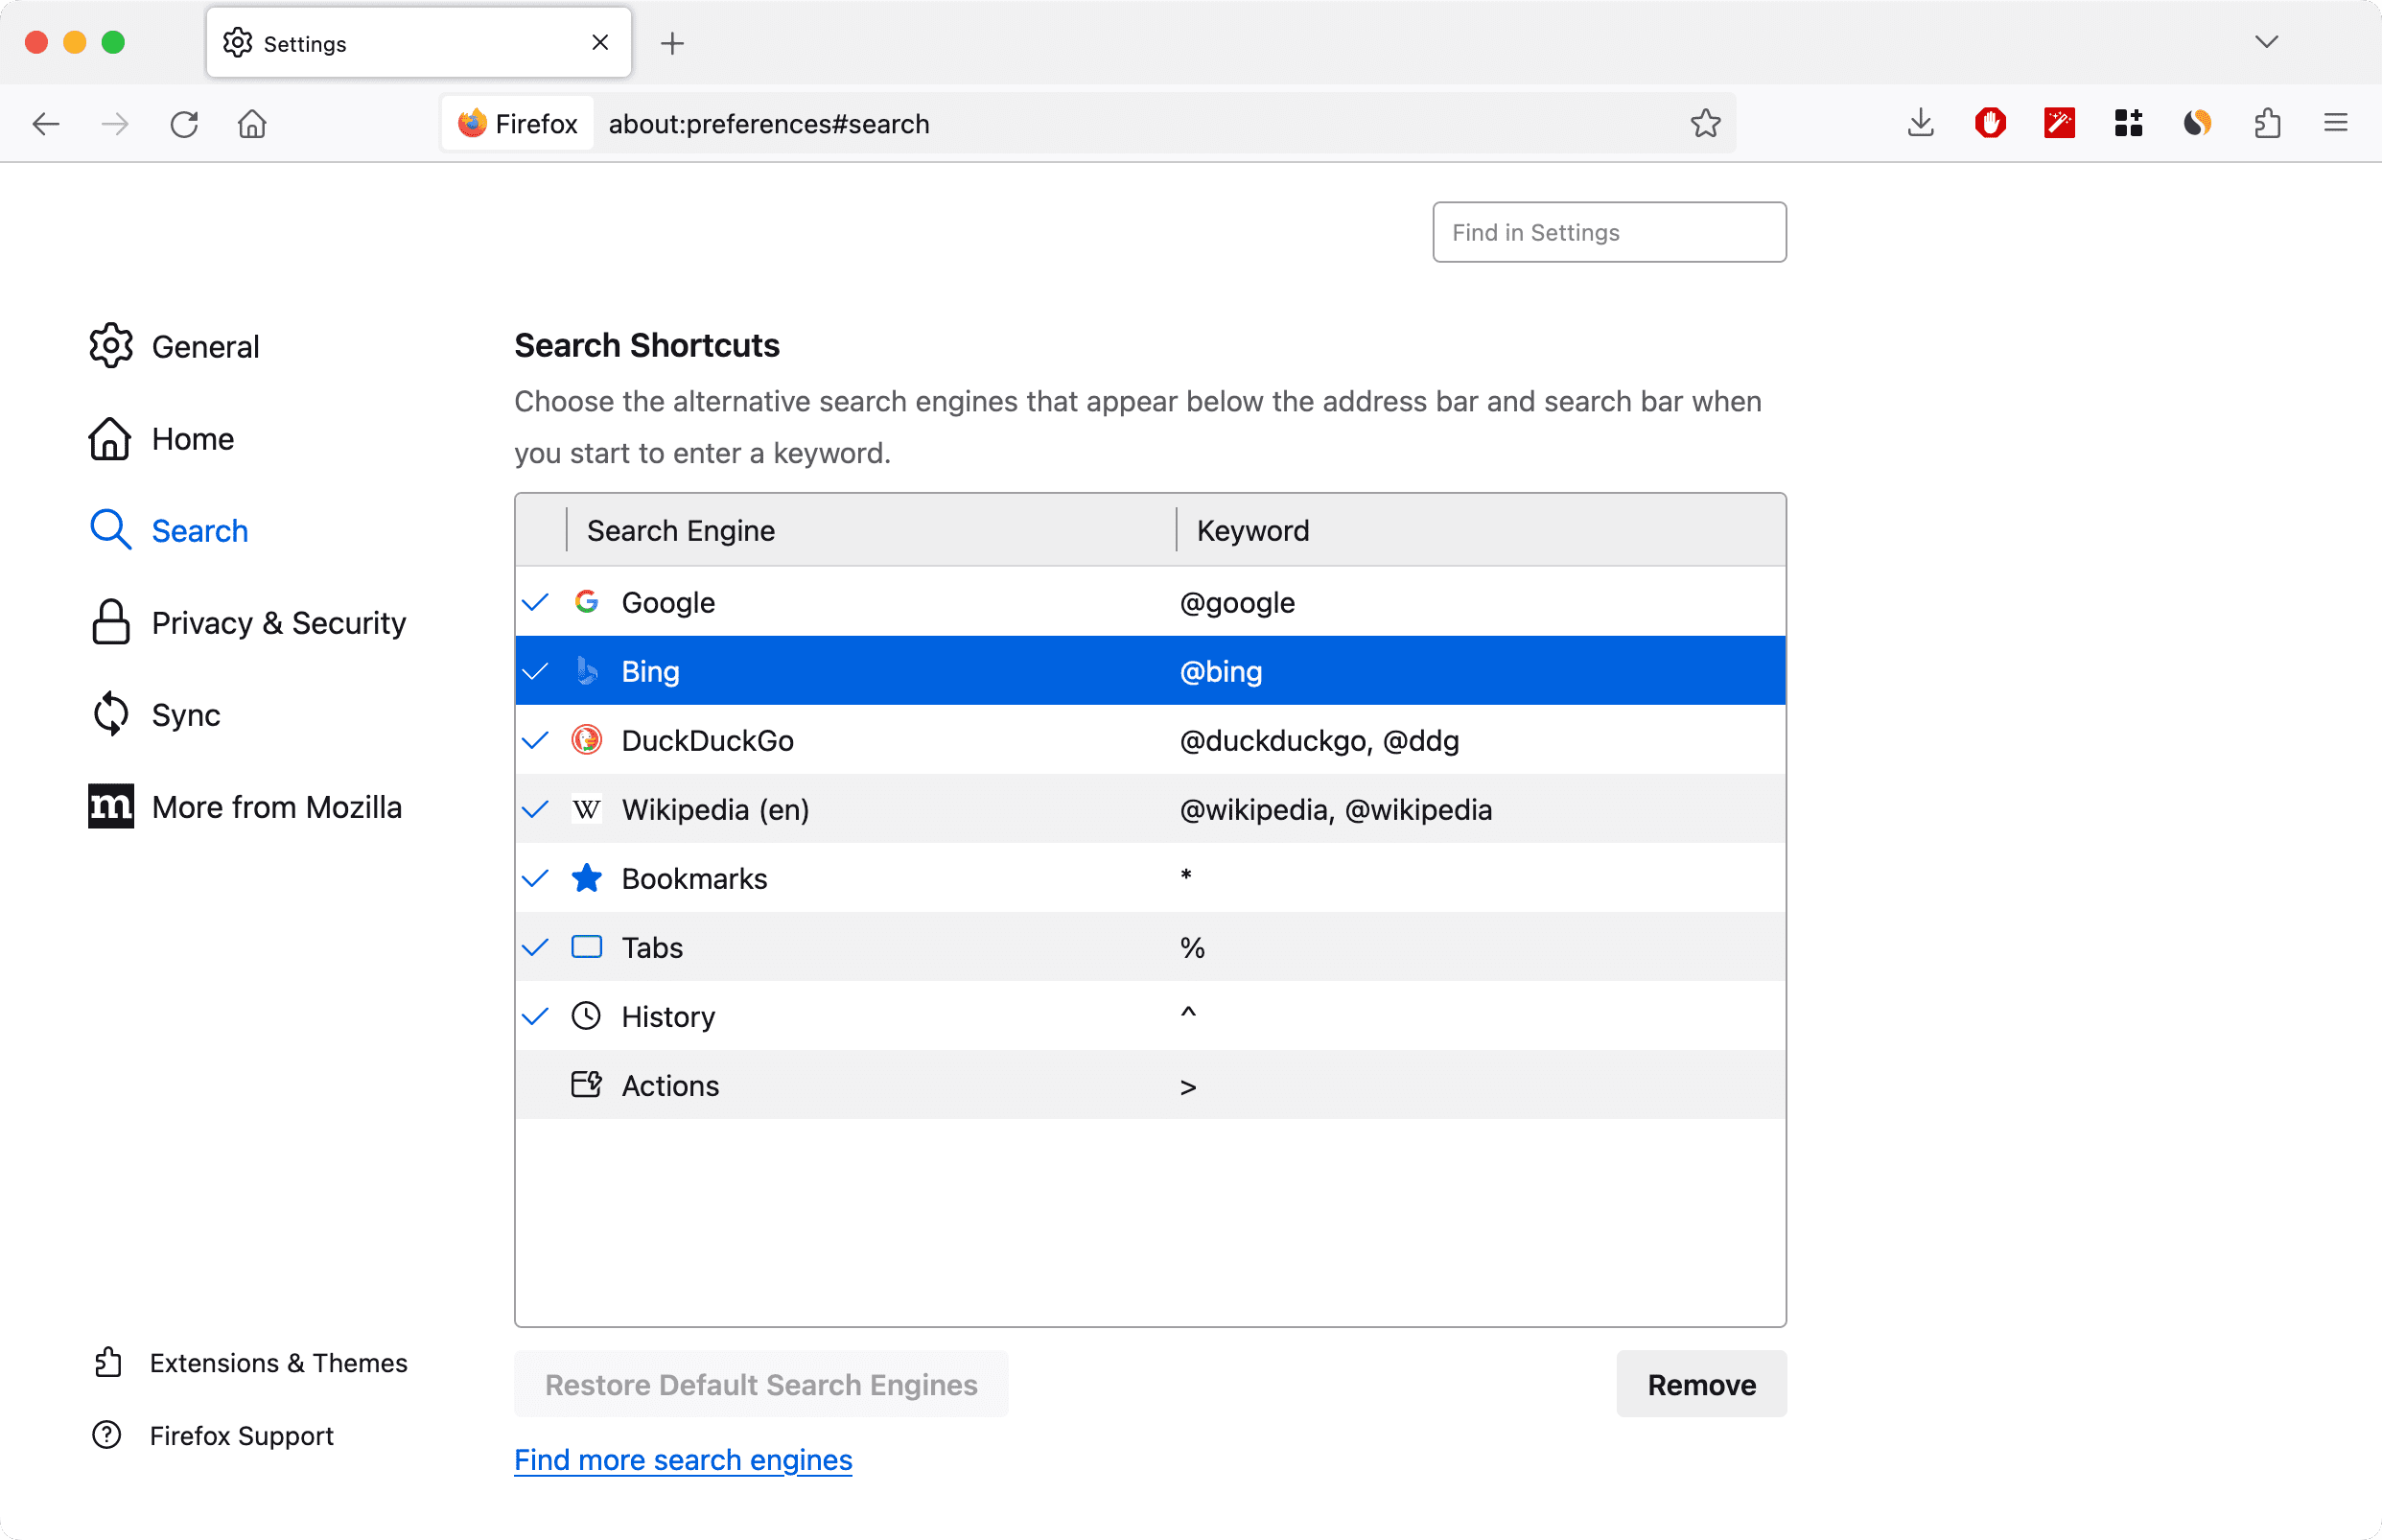 Search Shortcuts in Firefox Search settings on Mac